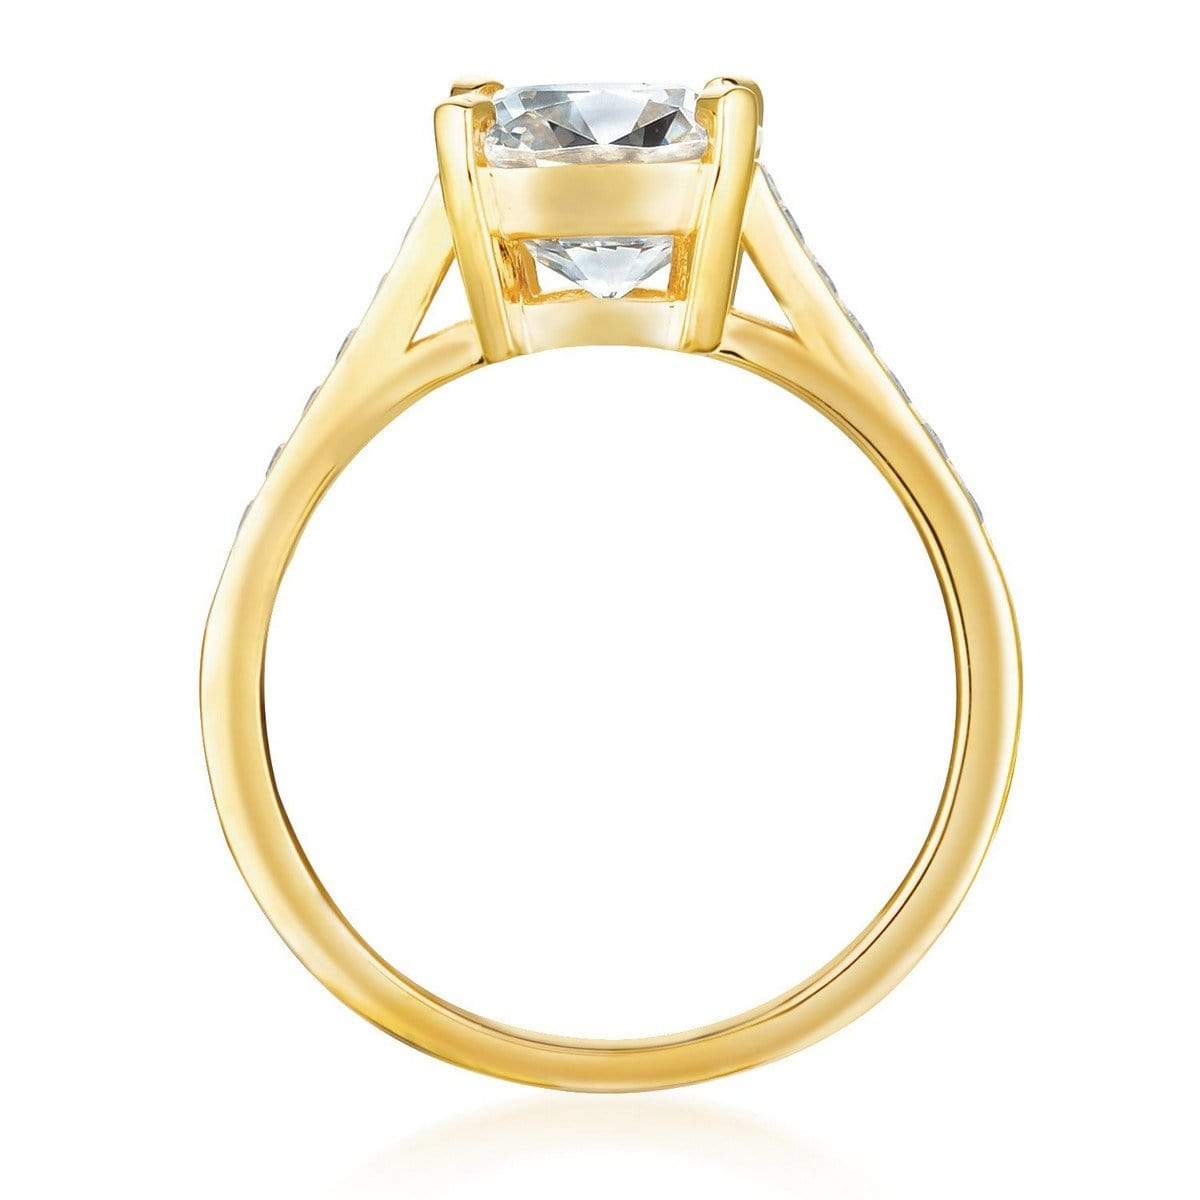 Crislu Jewelry CRISLU Radiant Cushion Cut Ring finished in 18KT Gold - Size 6